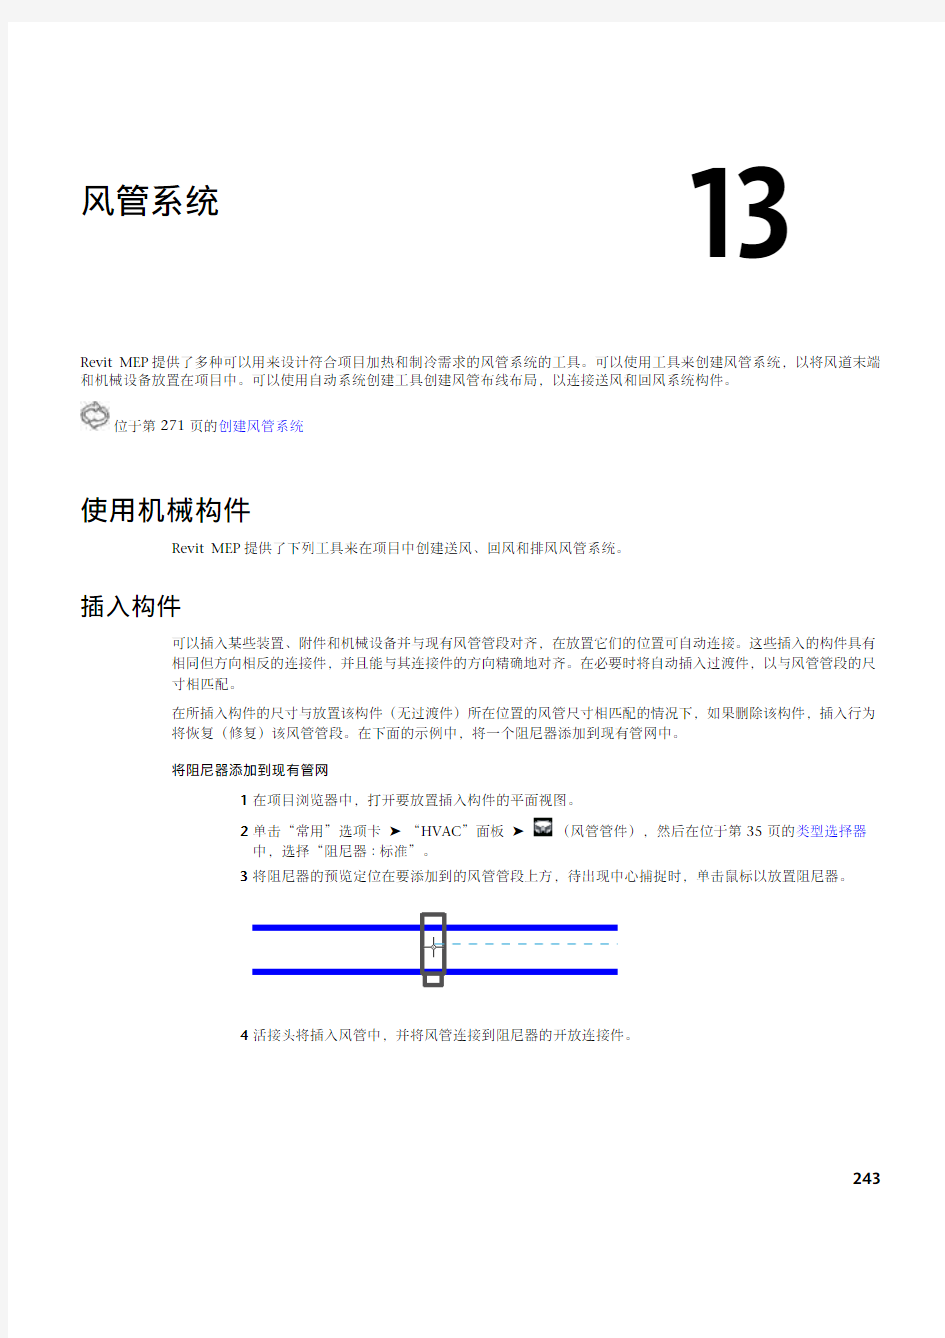 Revit MEP 2011 中文用户手册-风管系统